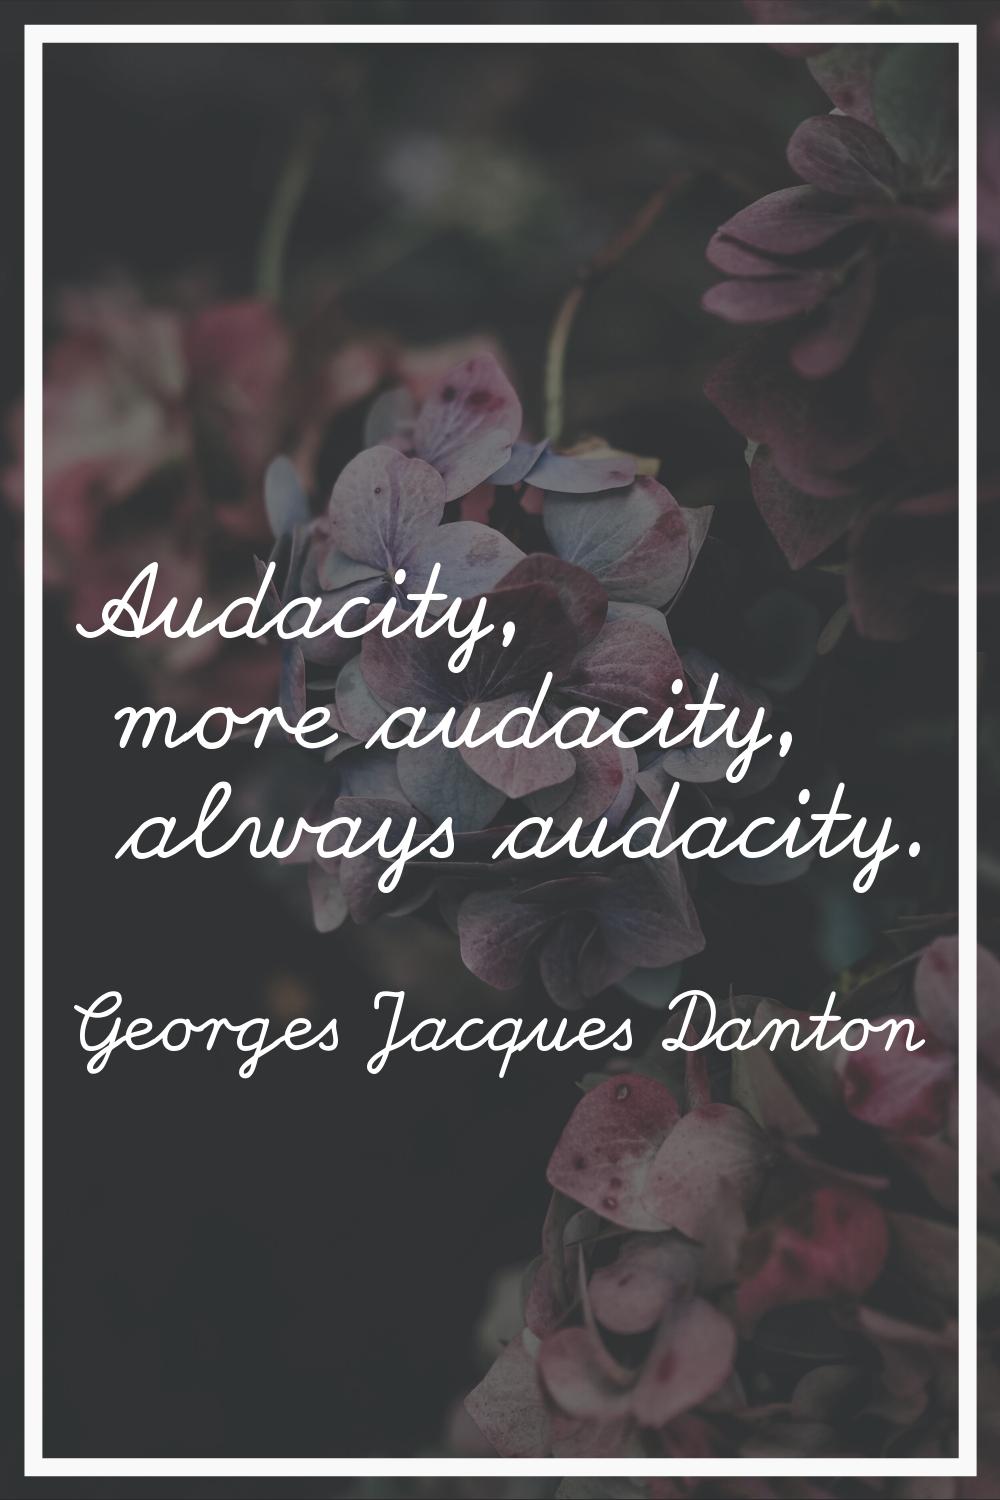 Audacity, more audacity, always audacity.